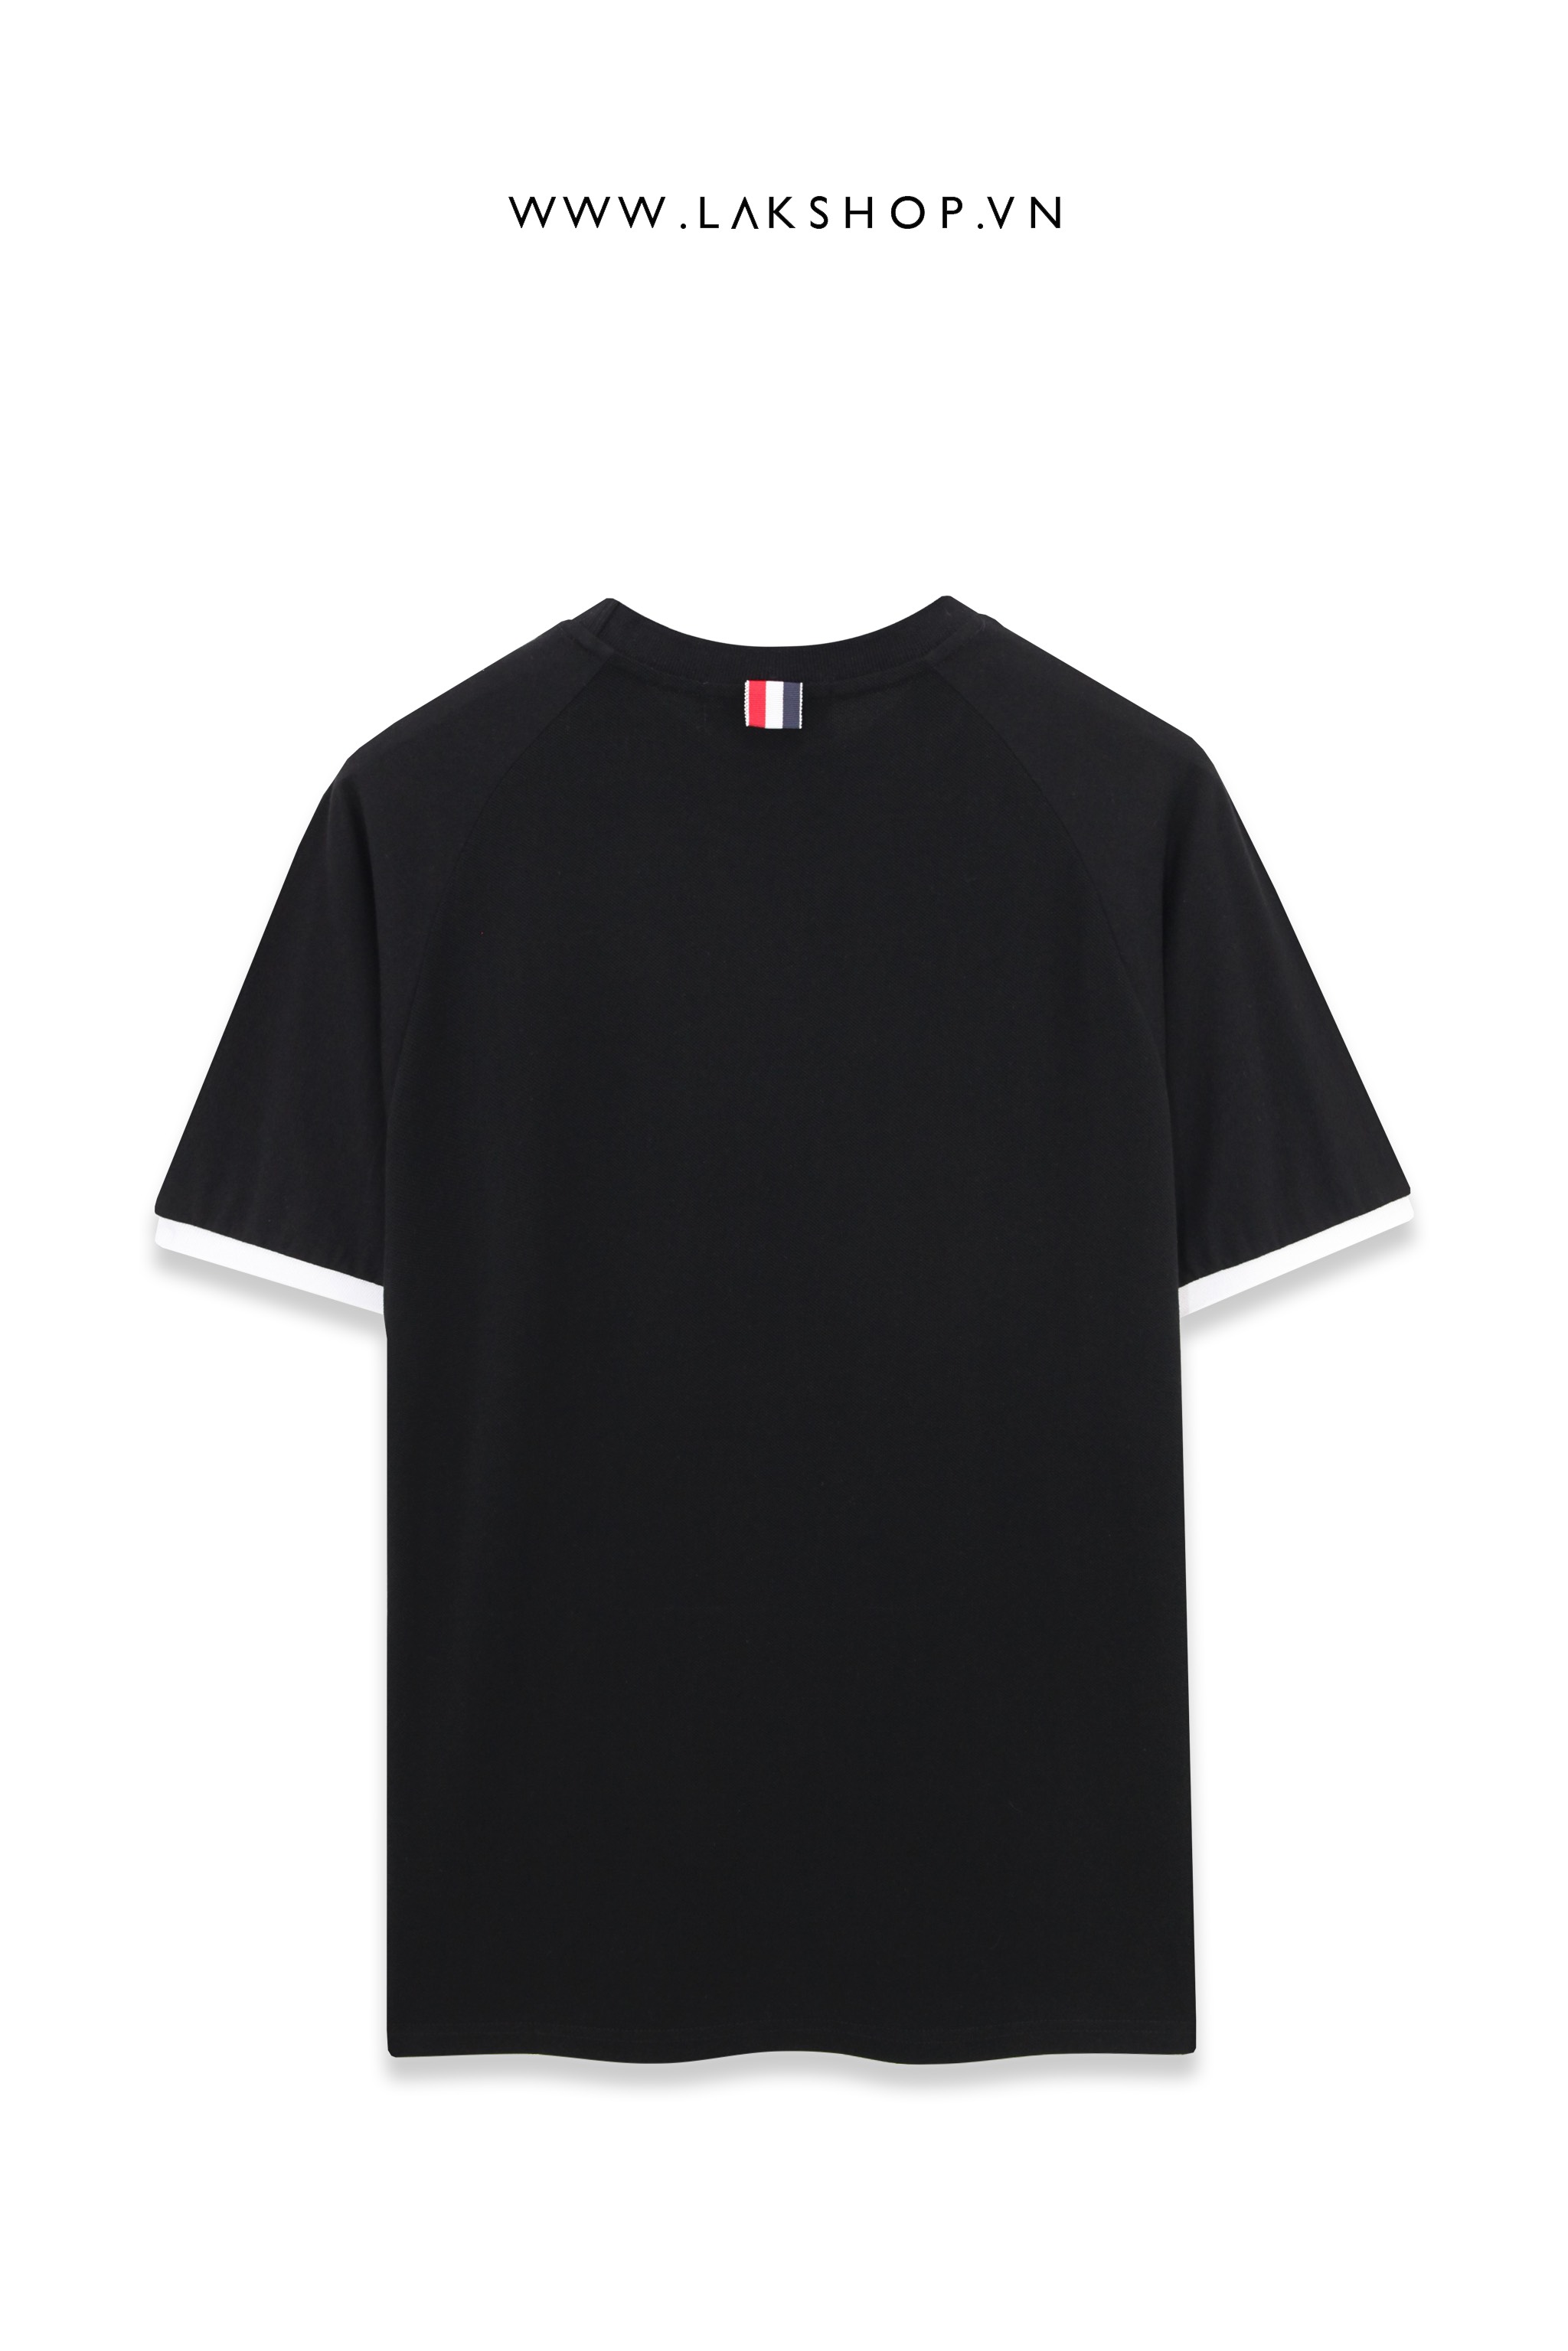 Th0m Br0wne Striped Shoulder in Black T-Shirt cx2